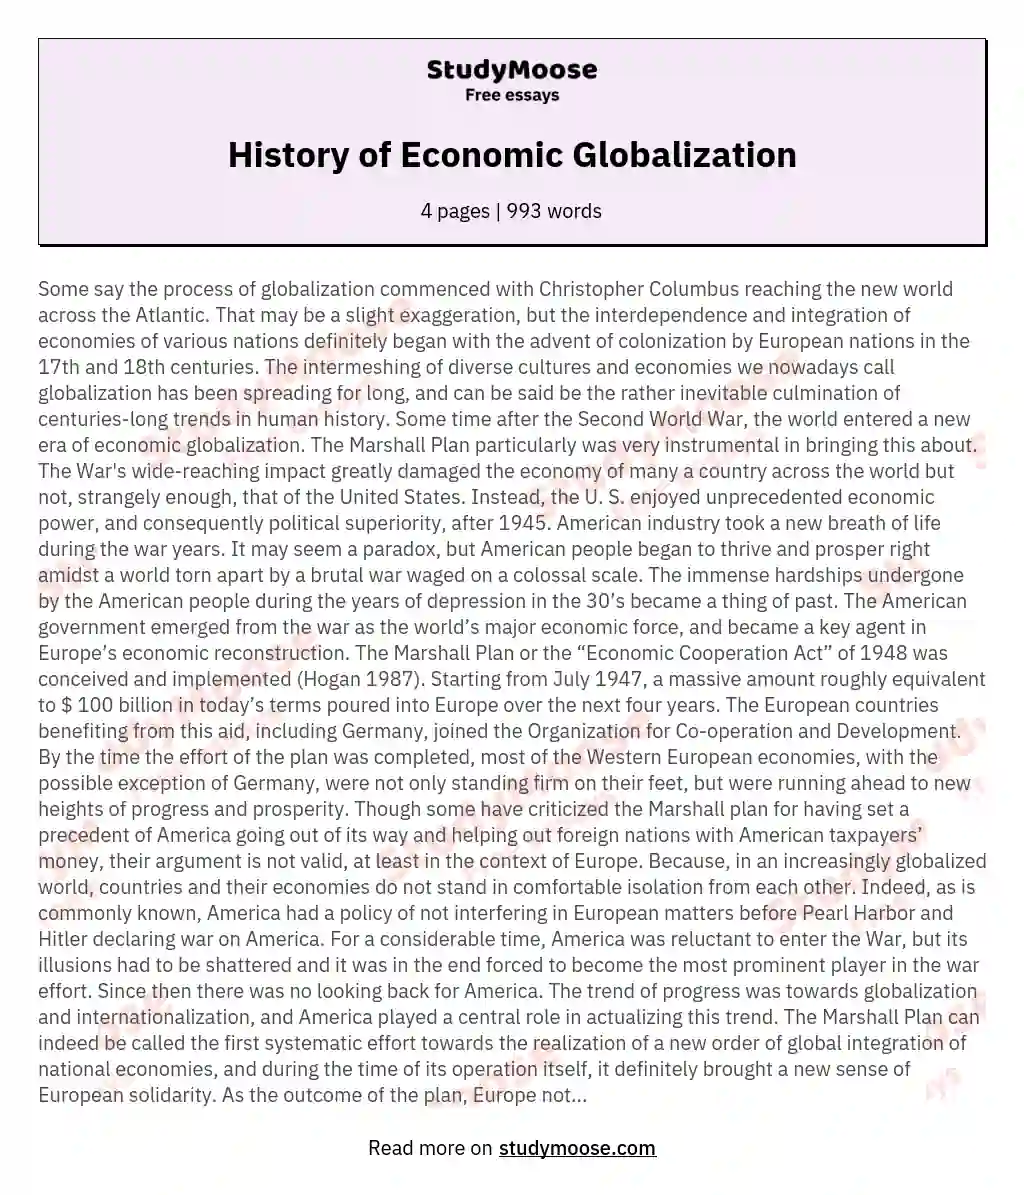 History of Economic Globalization essay